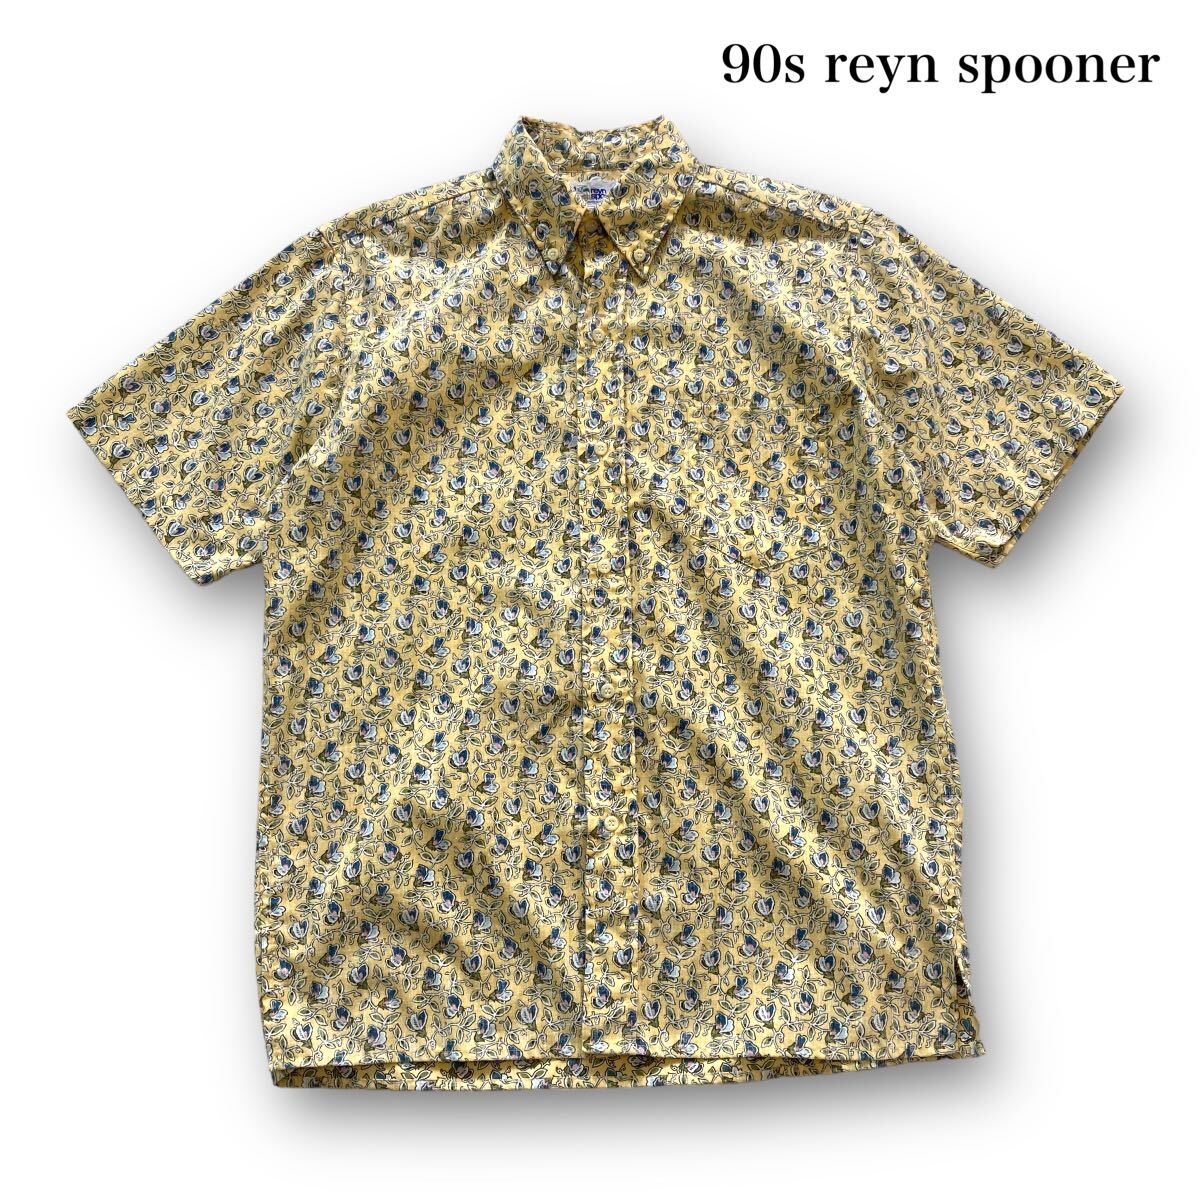 【reyn spooner】90s レインスプーナー リバースプリント半袖シャツ 総柄シャツ ボタンダウンシャツ ハワイアンシャツ ビキニタグ 古着 